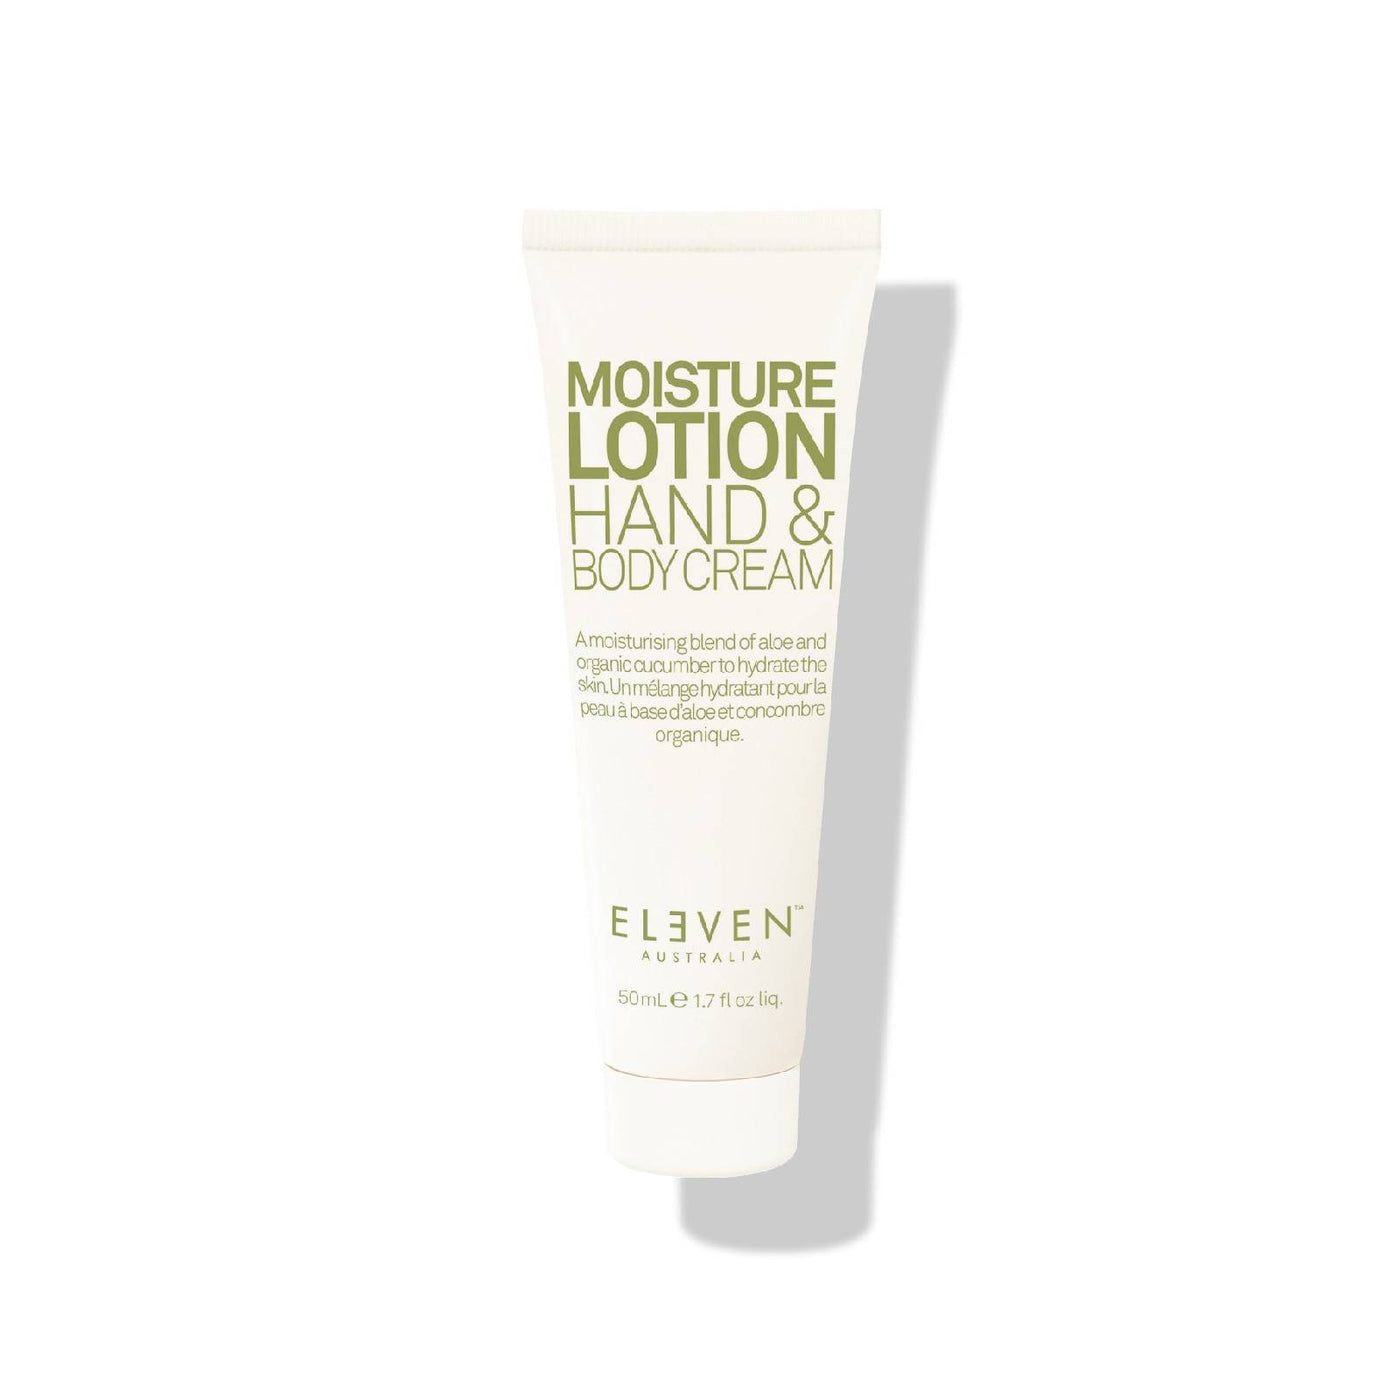 ELEVEN Australia Moisture Lotion Hand & Body Cream 50ml